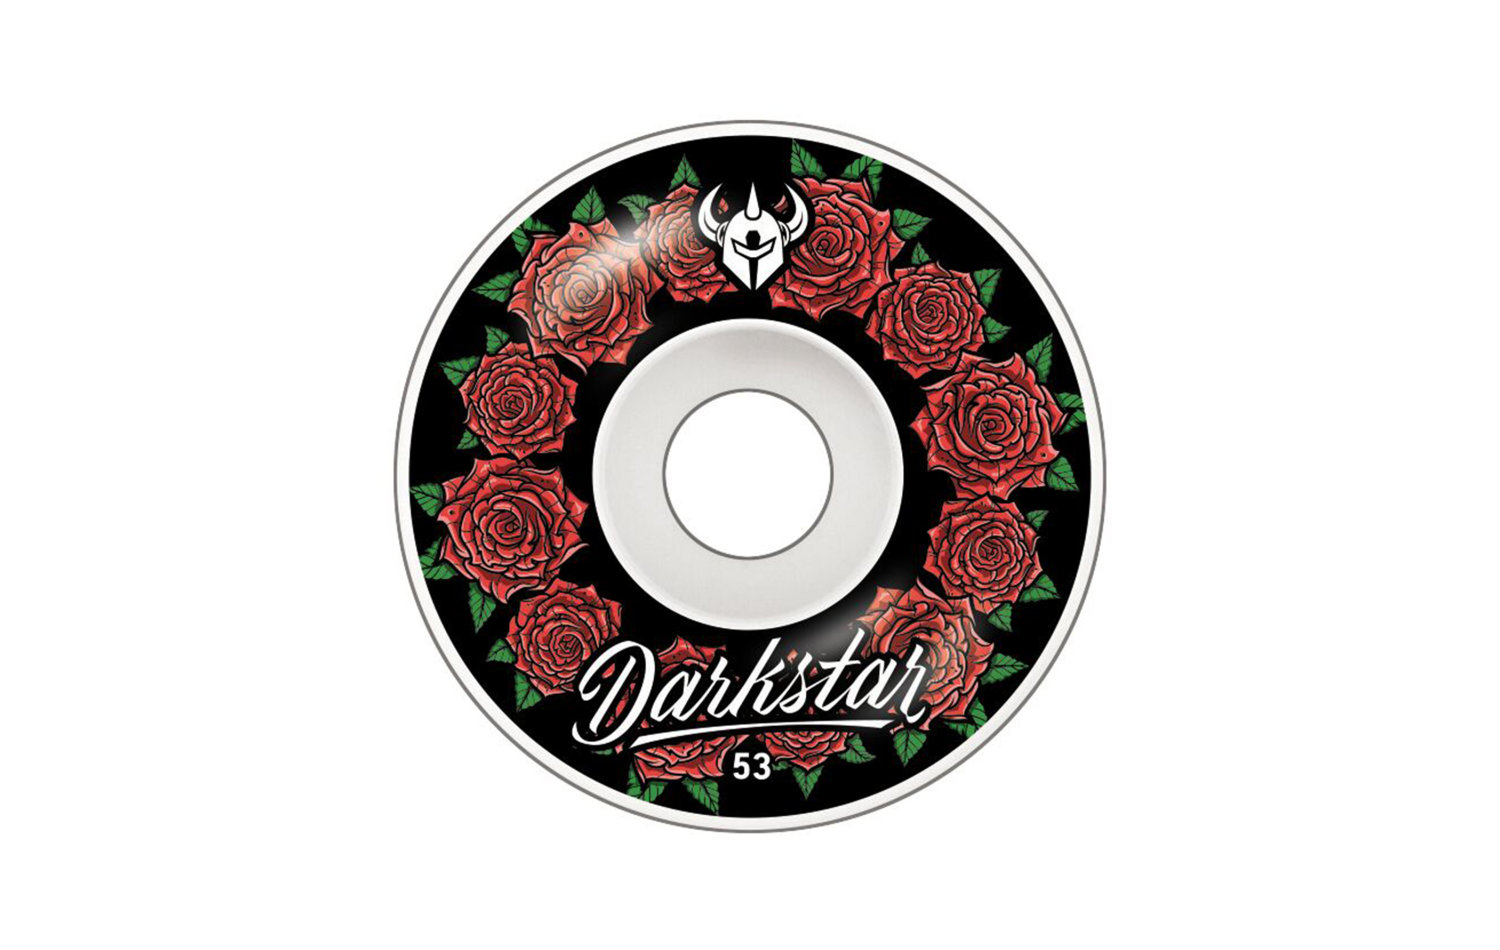 Darkstar In Bloom Wheels 53mm (10112338)